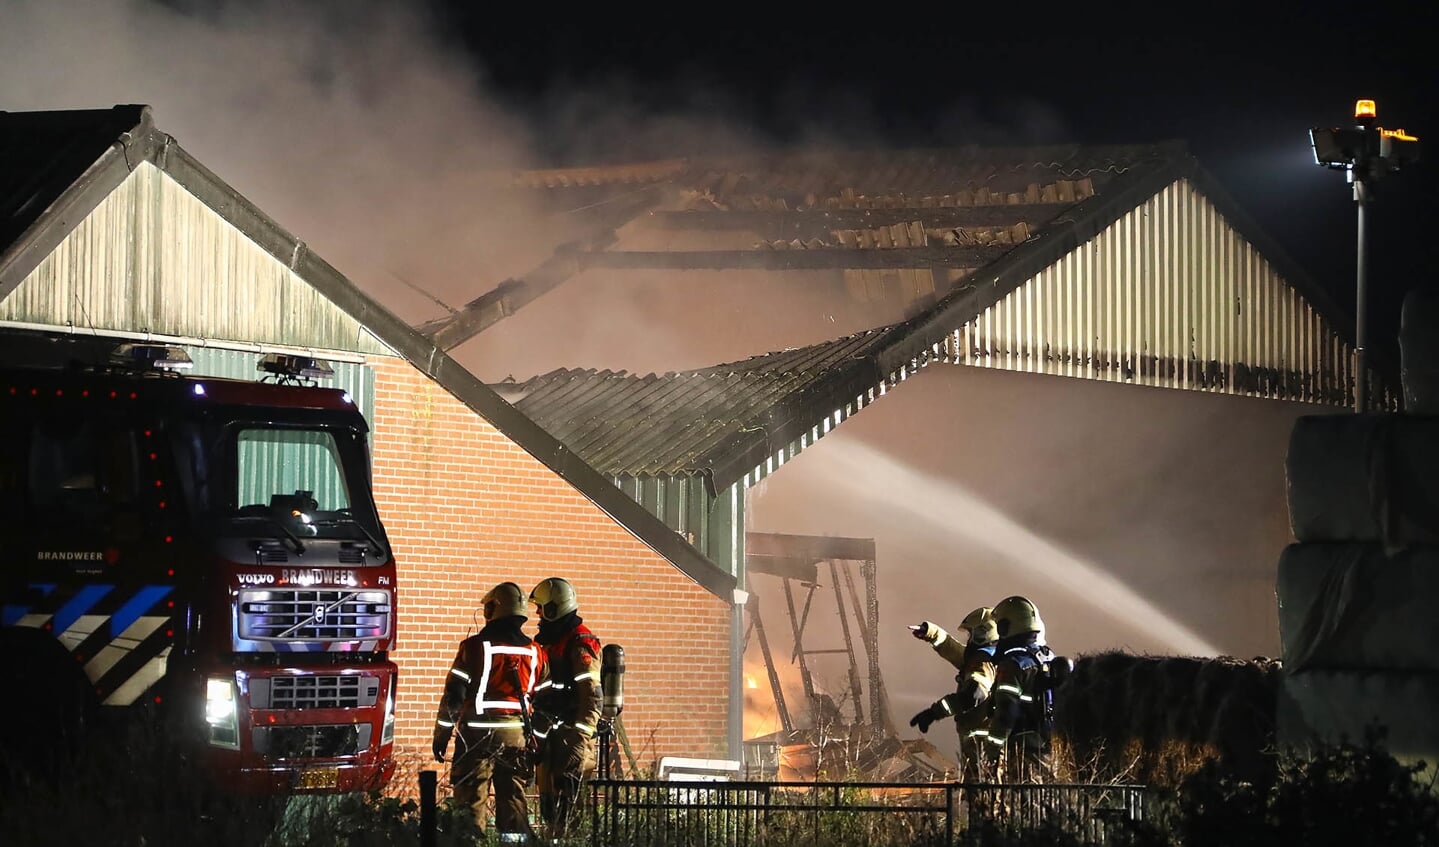 Grote brand in Deursen-Dennenburg. Foto Gabor Heeres - Foto Mallo.